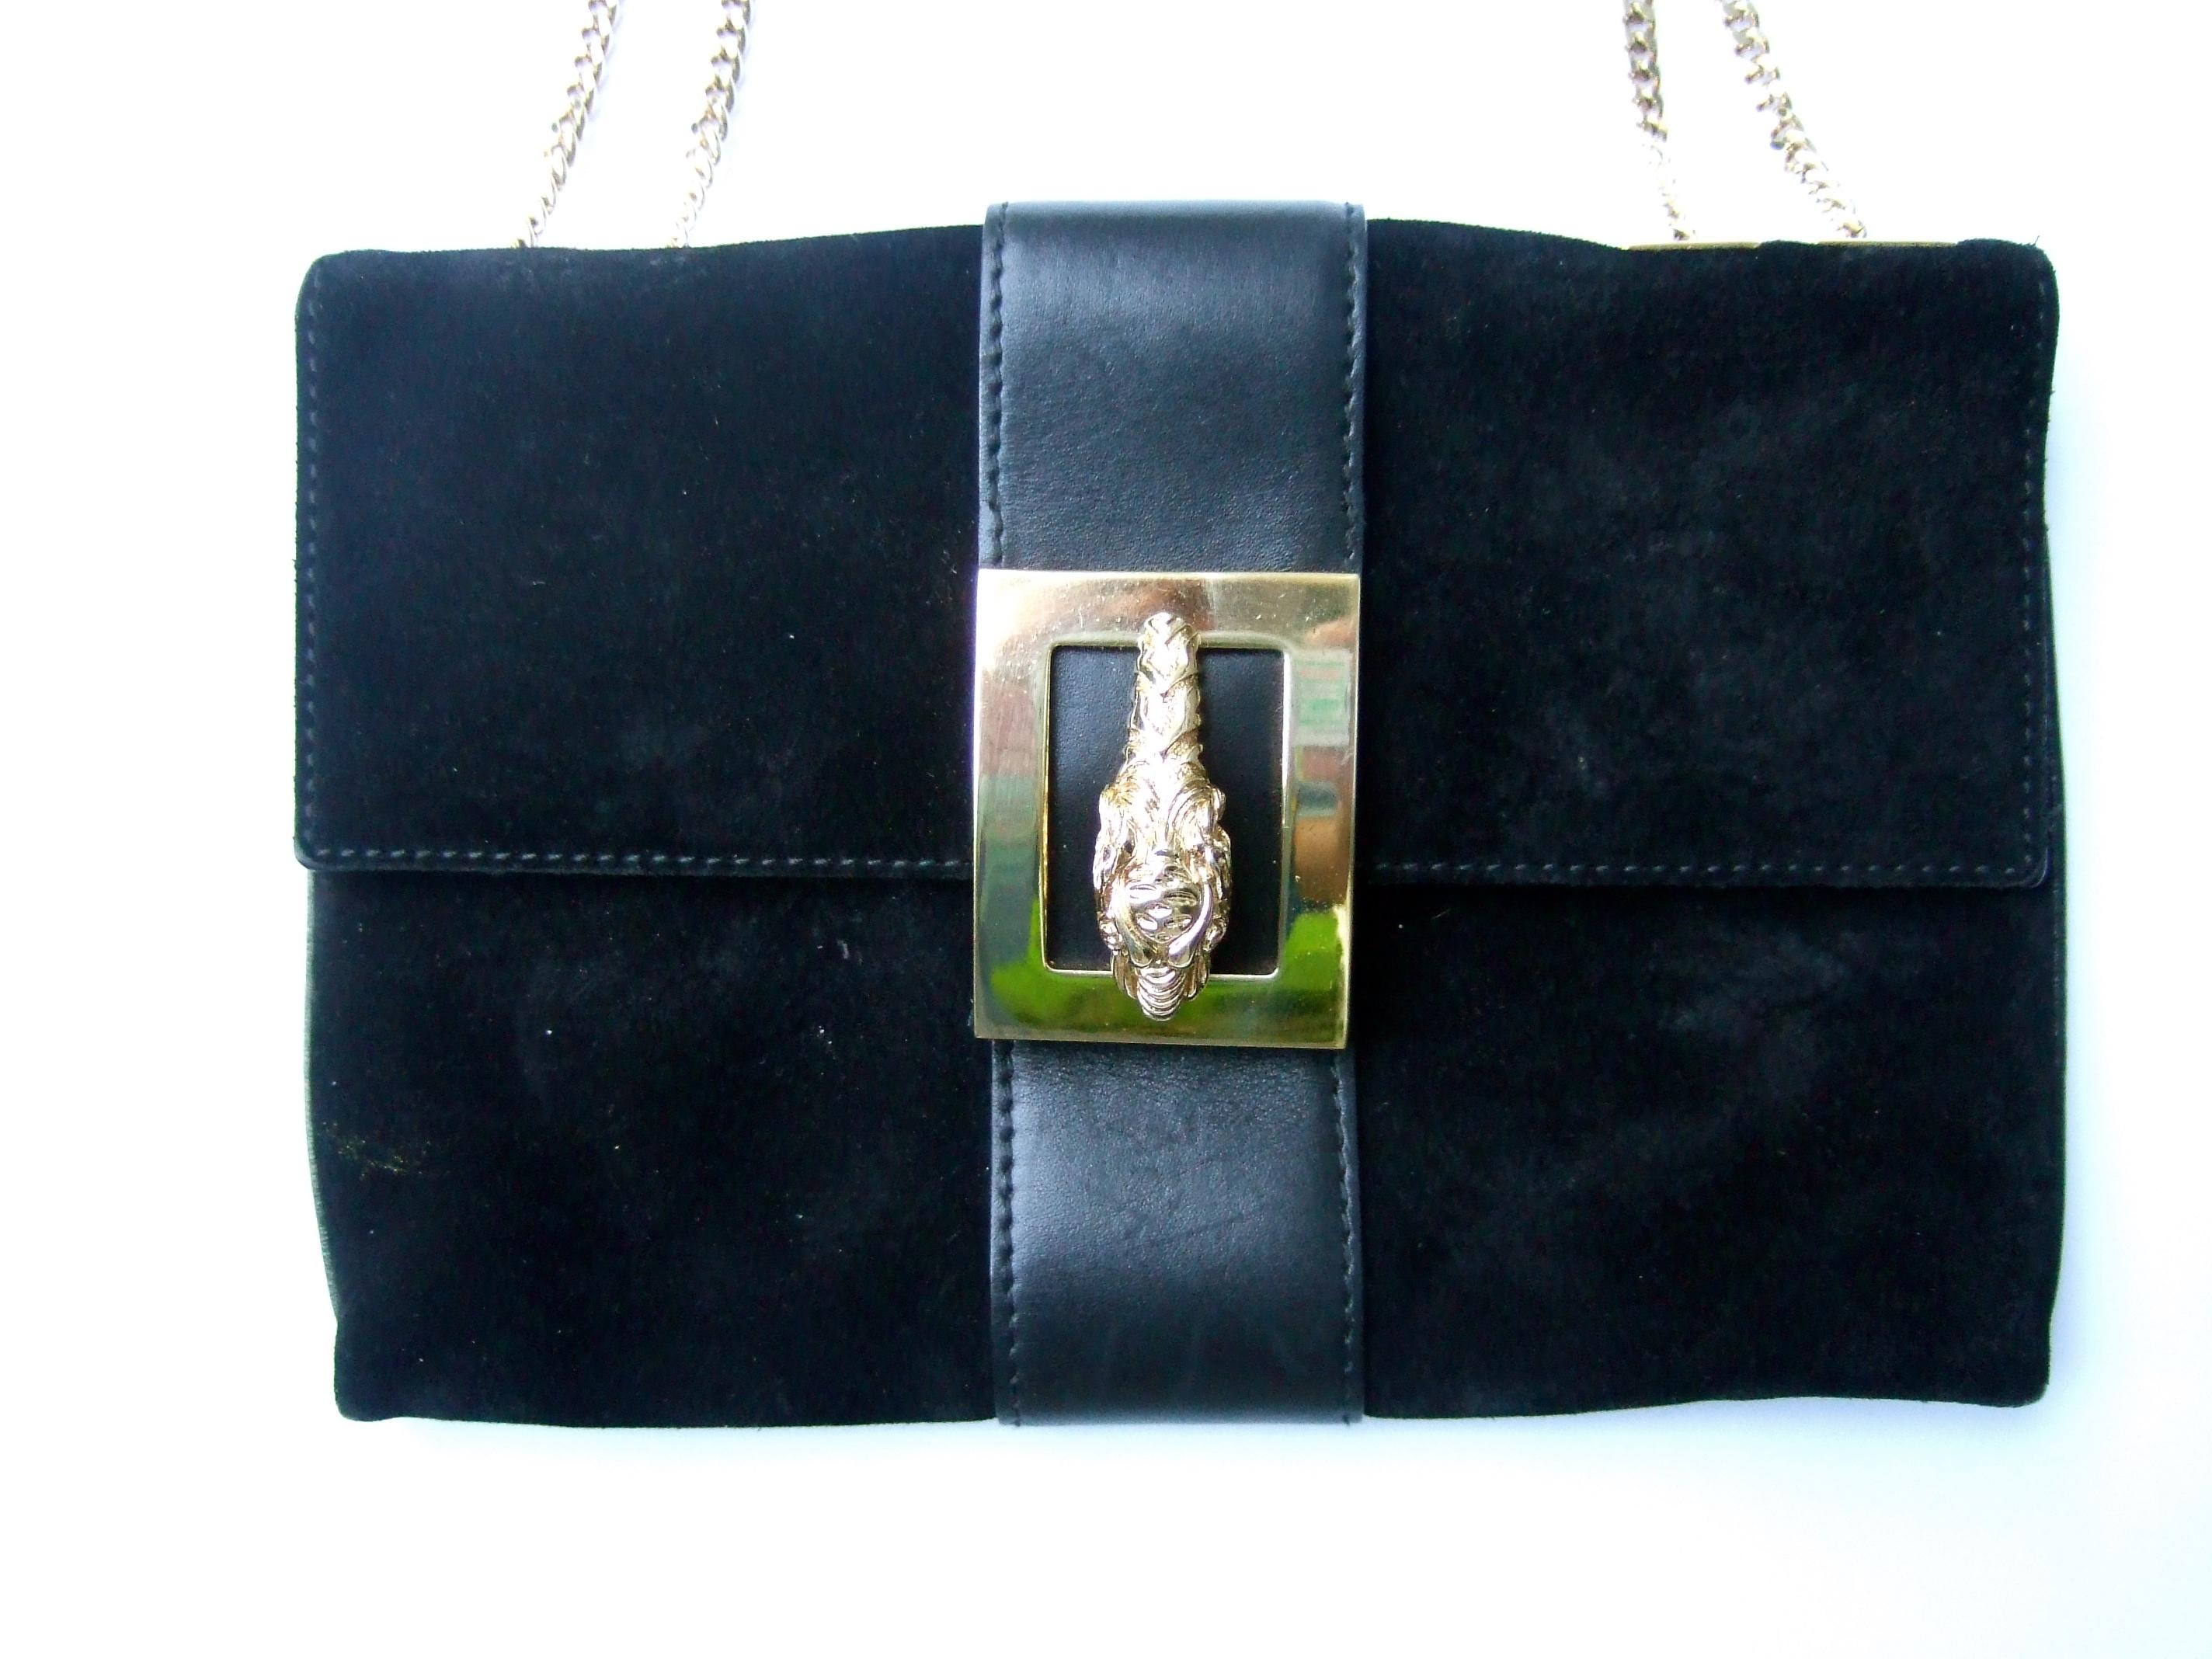 Gucci Italy Rare Black Suede Tiger Emblem Handbag Tom Ford Design c 1990s  For Sale 15